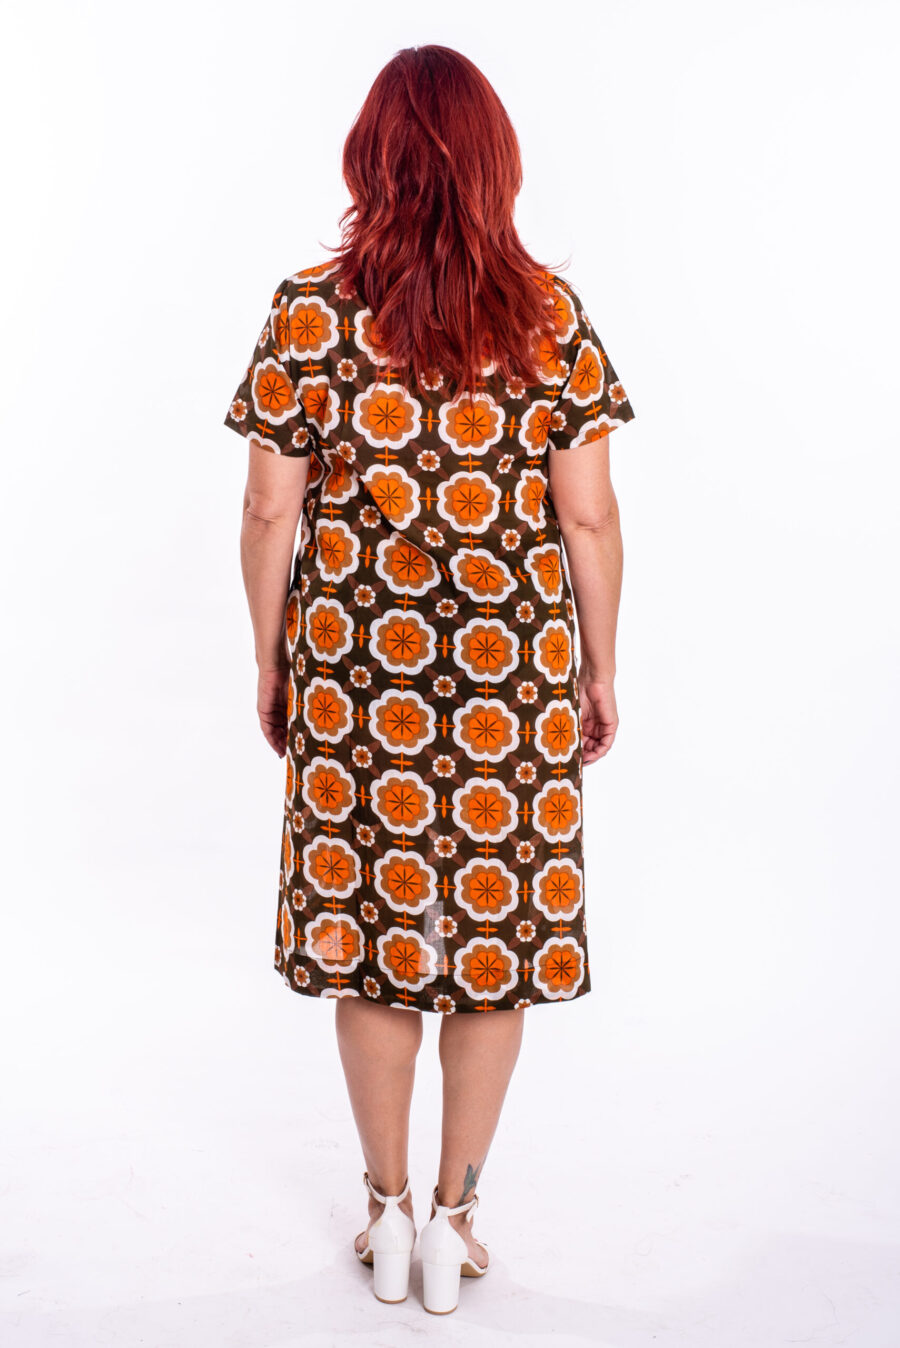 Eve dress | Uniquely designed dress - Midi dress with raving retro print